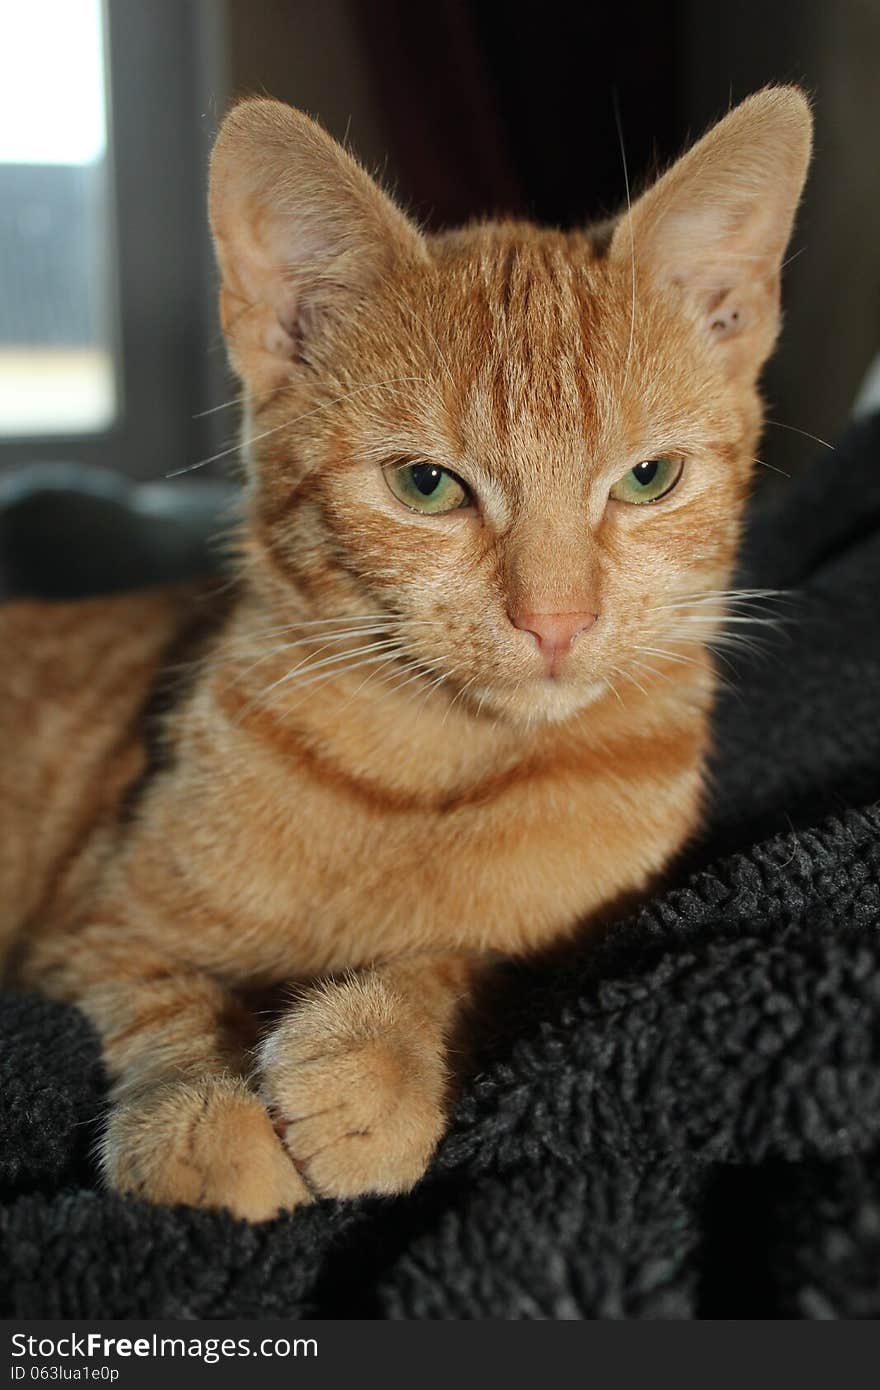 A close up portrait of a mature, orange tabby cat with big green eyes. A close up portrait of a mature, orange tabby cat with big green eyes